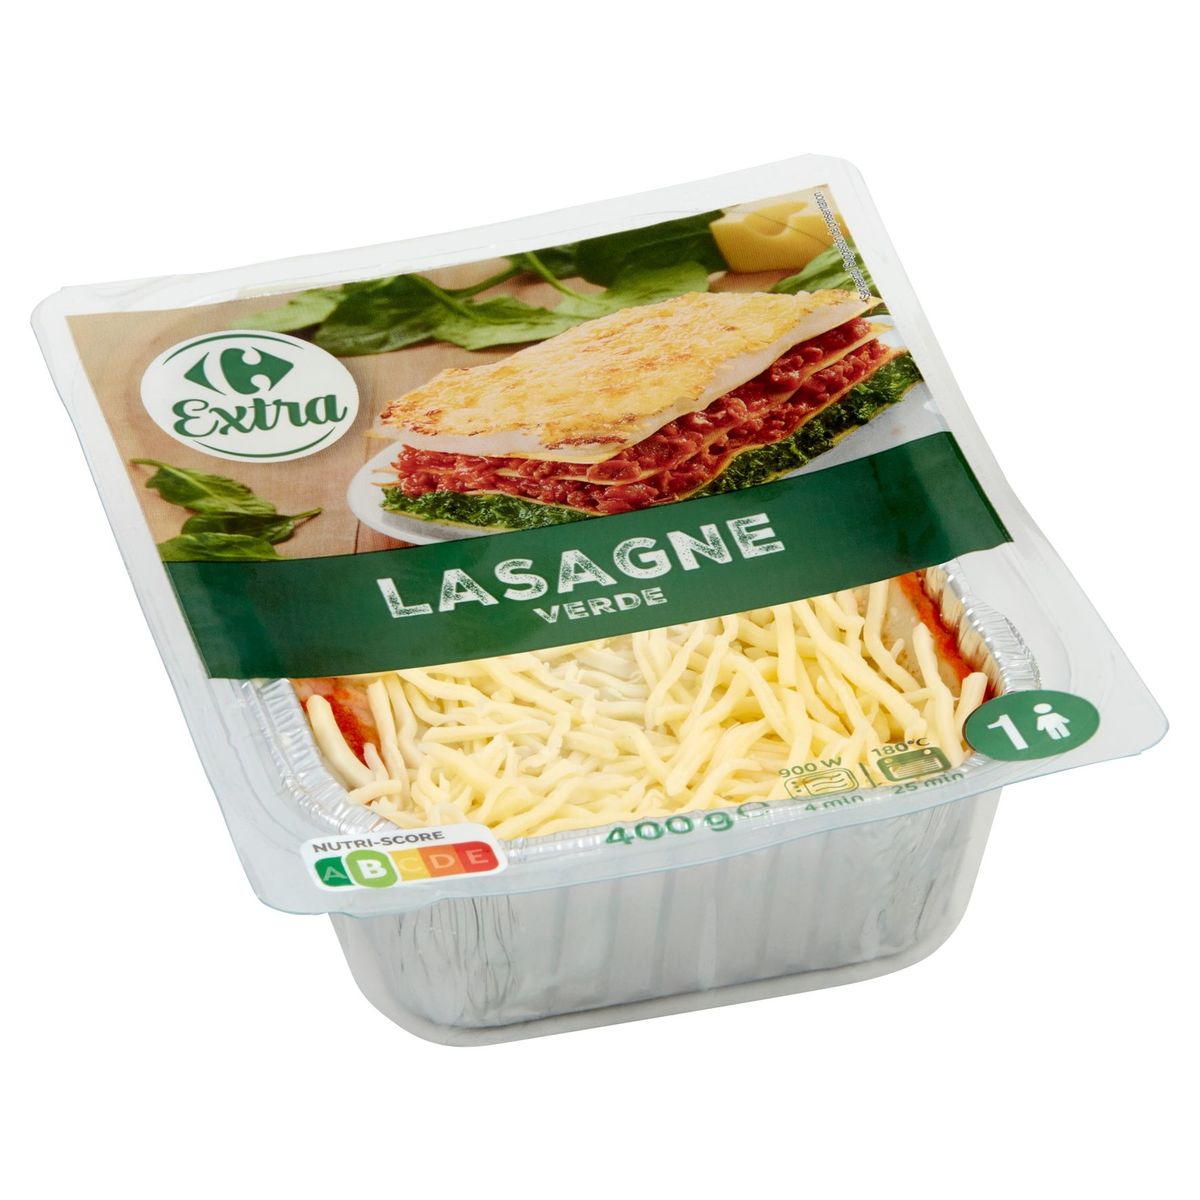 Carrefour Extra Lasagne Verde 400 g